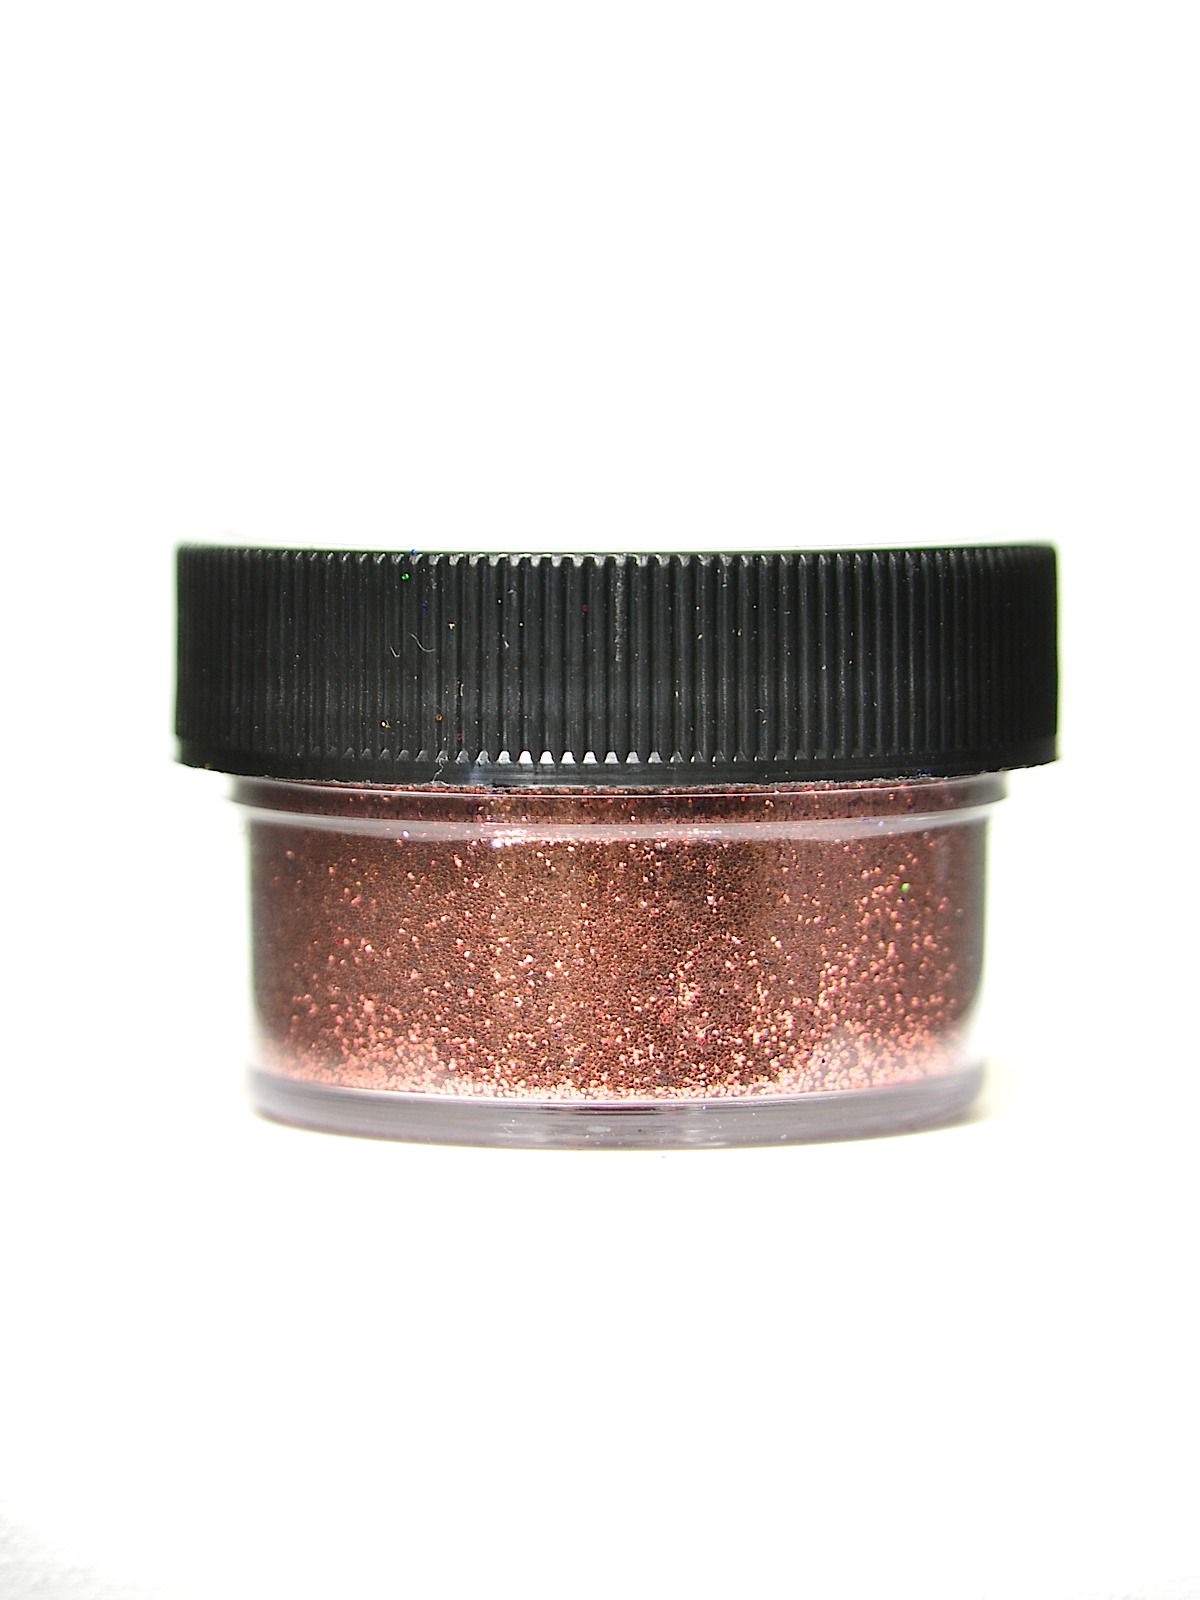 Ultrafine Opaque Glitter Suede 1 2 Oz. Jar